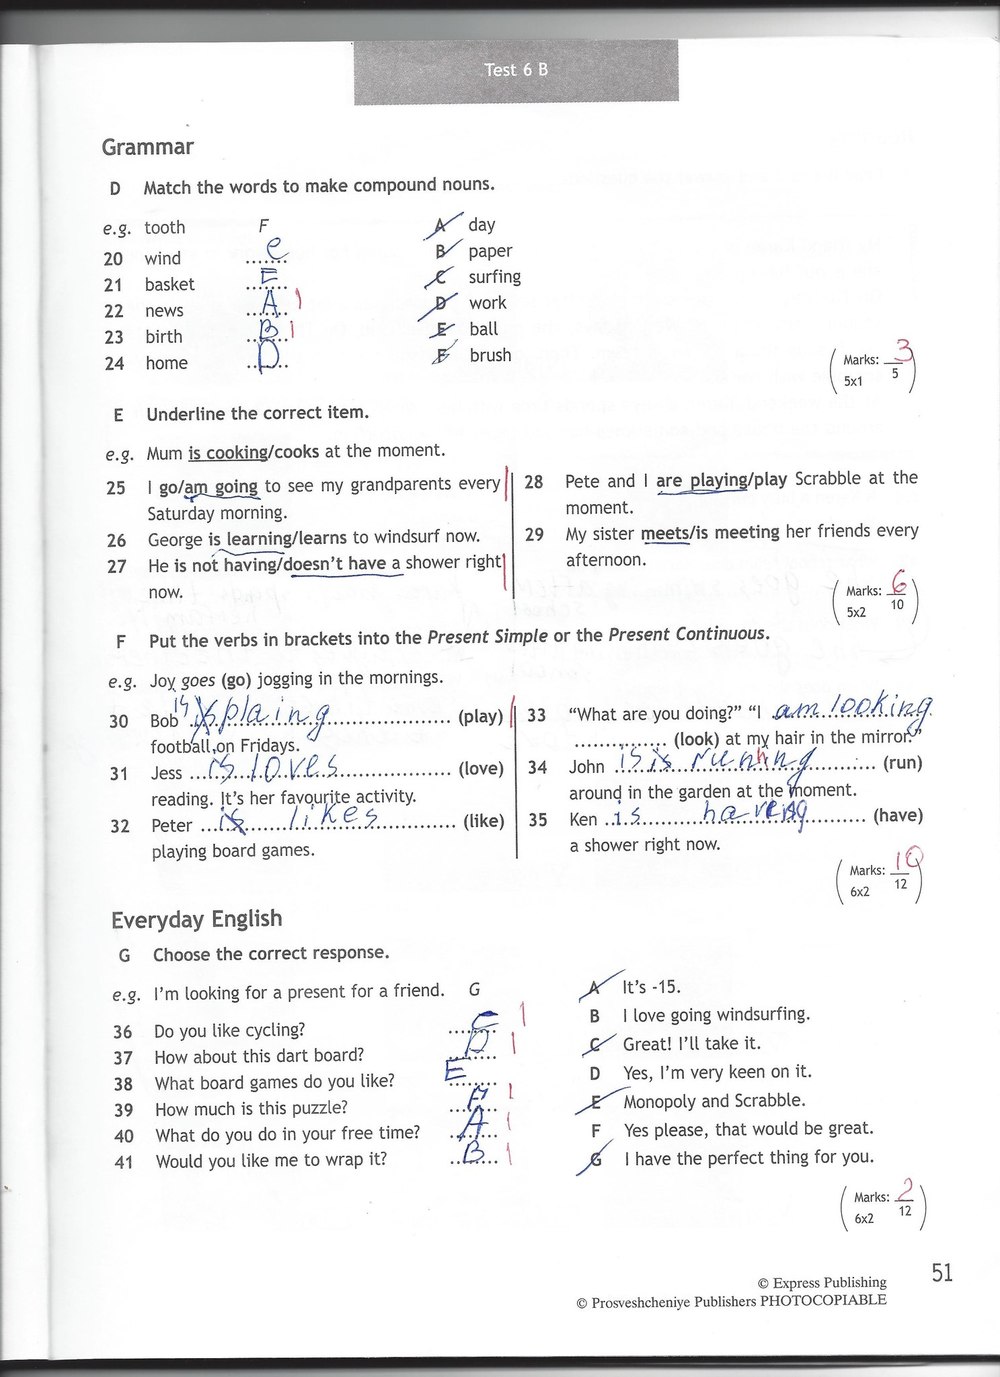 Тест бук 7 класс ответы. Англ тест Grammar 6 класс. Test 6a 6 класс ответы Spotlight. Test 7b по английскому 6 класс Spotlight. Spotlight 3 Test booklet 6a 6b ответы.